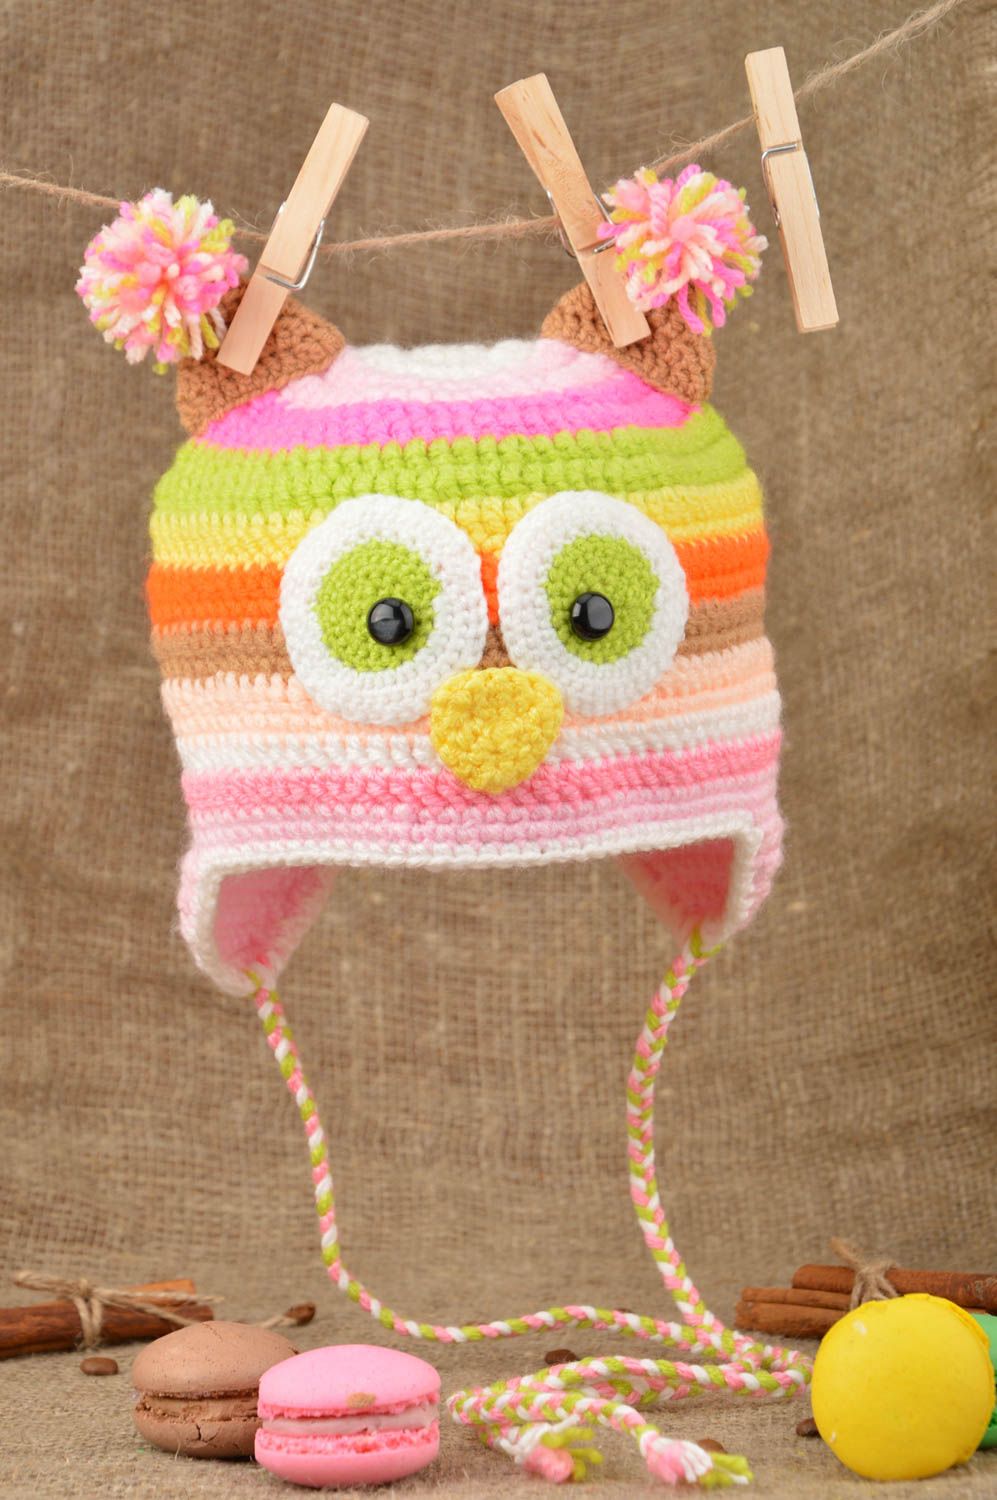 Unusual handmade beautiful crocheted cap in shape of owl on strings for kids photo 1